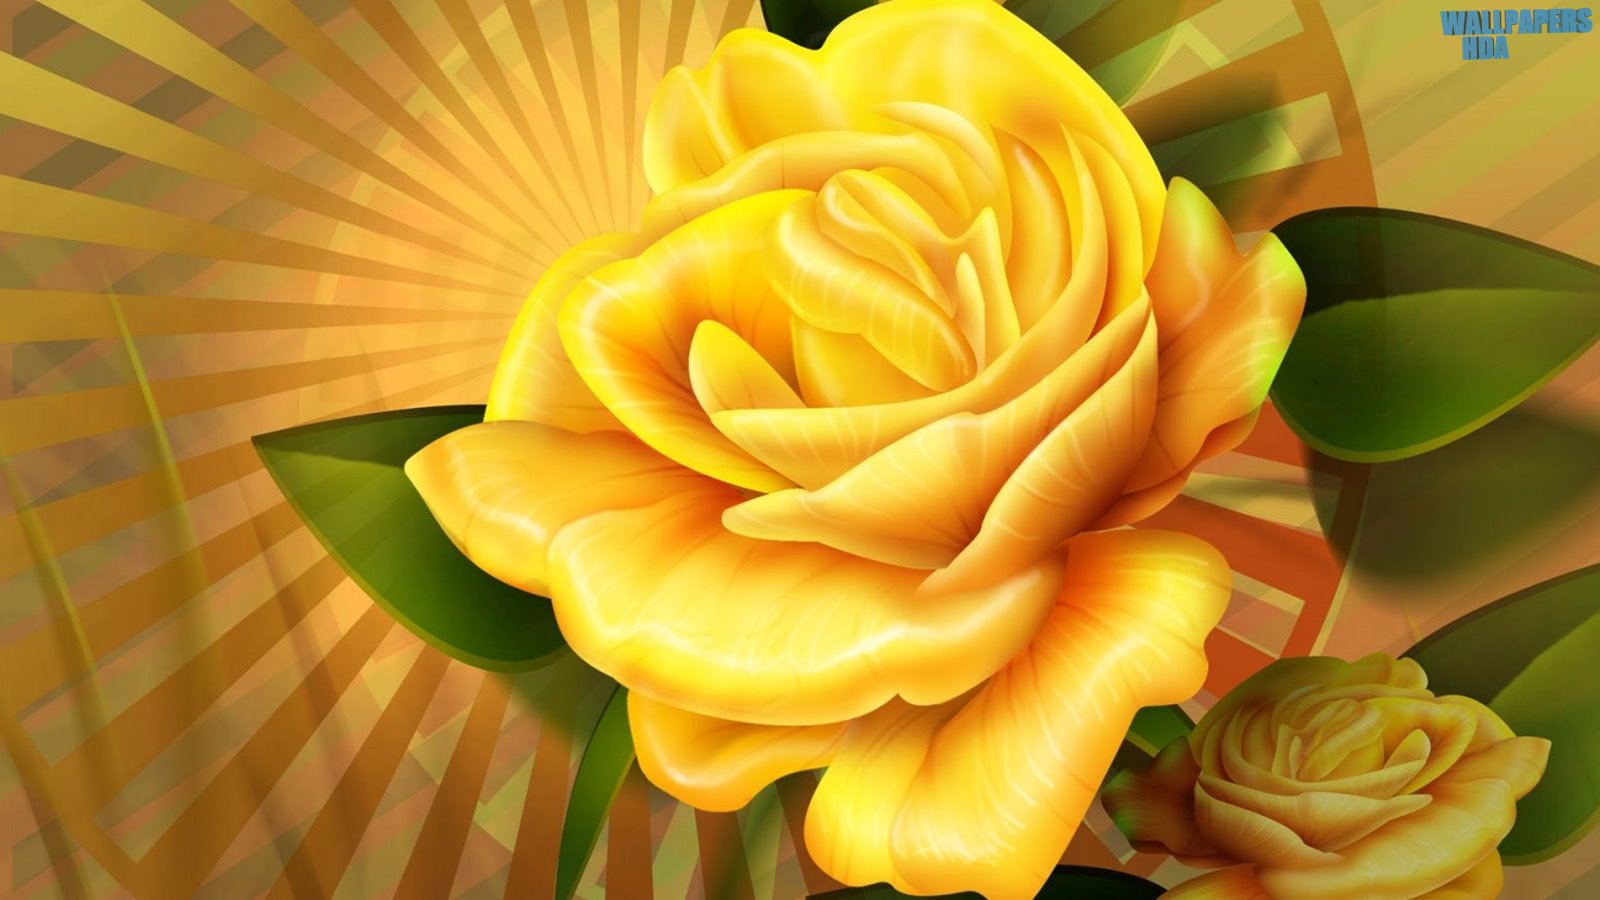 Yellow roses illustration wallpaper 1600x900